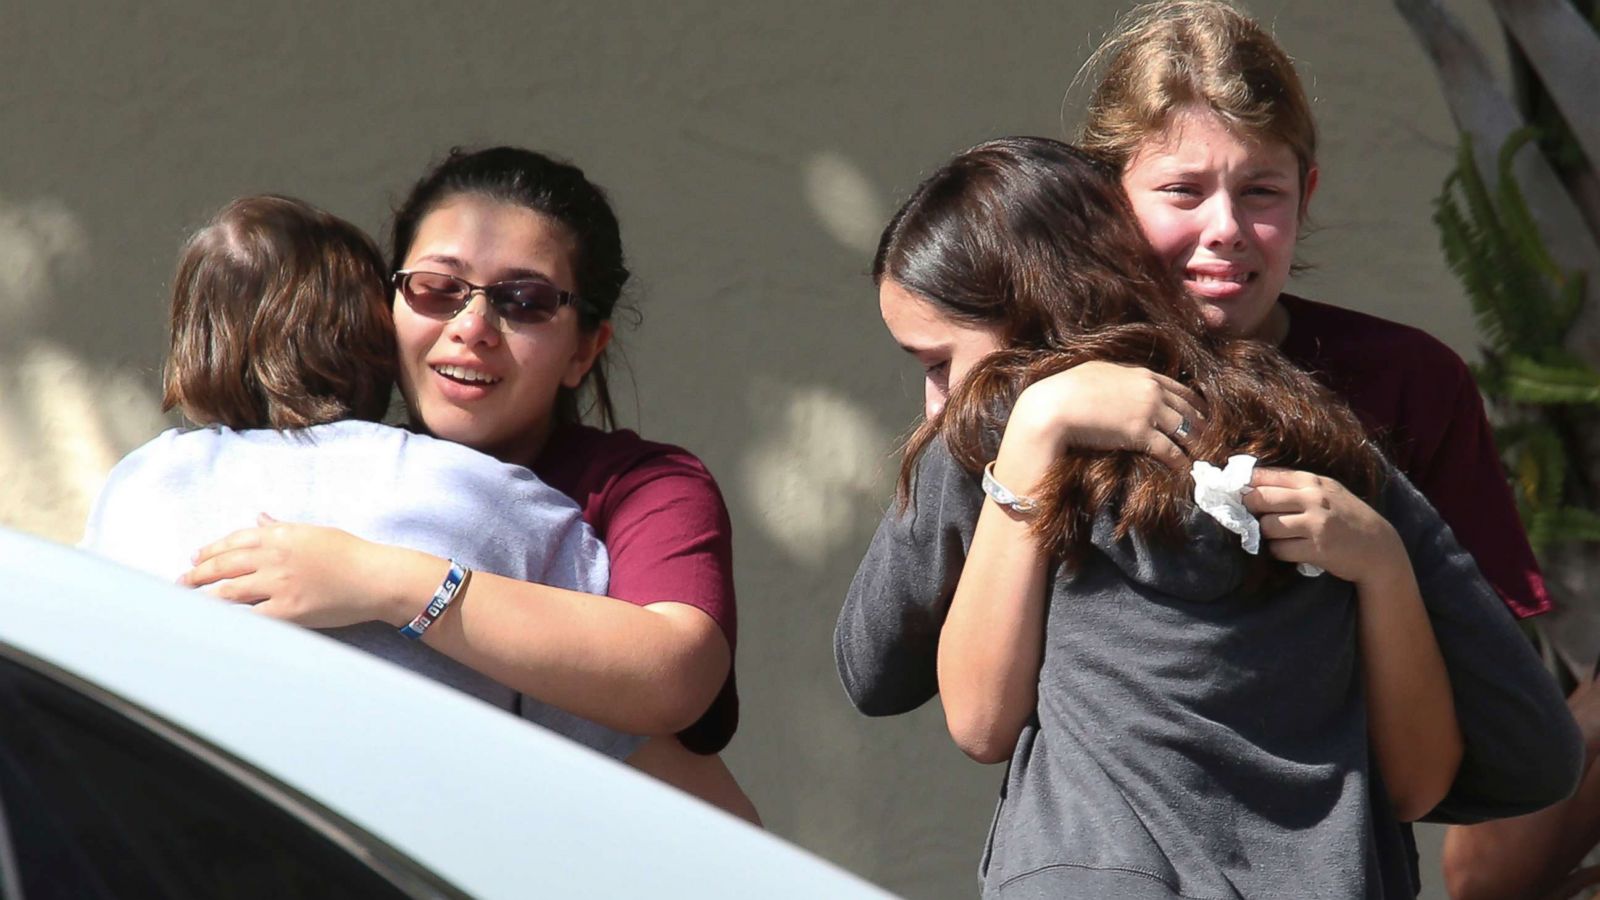 Shooting at Florida high school unnerves WNC students, parents